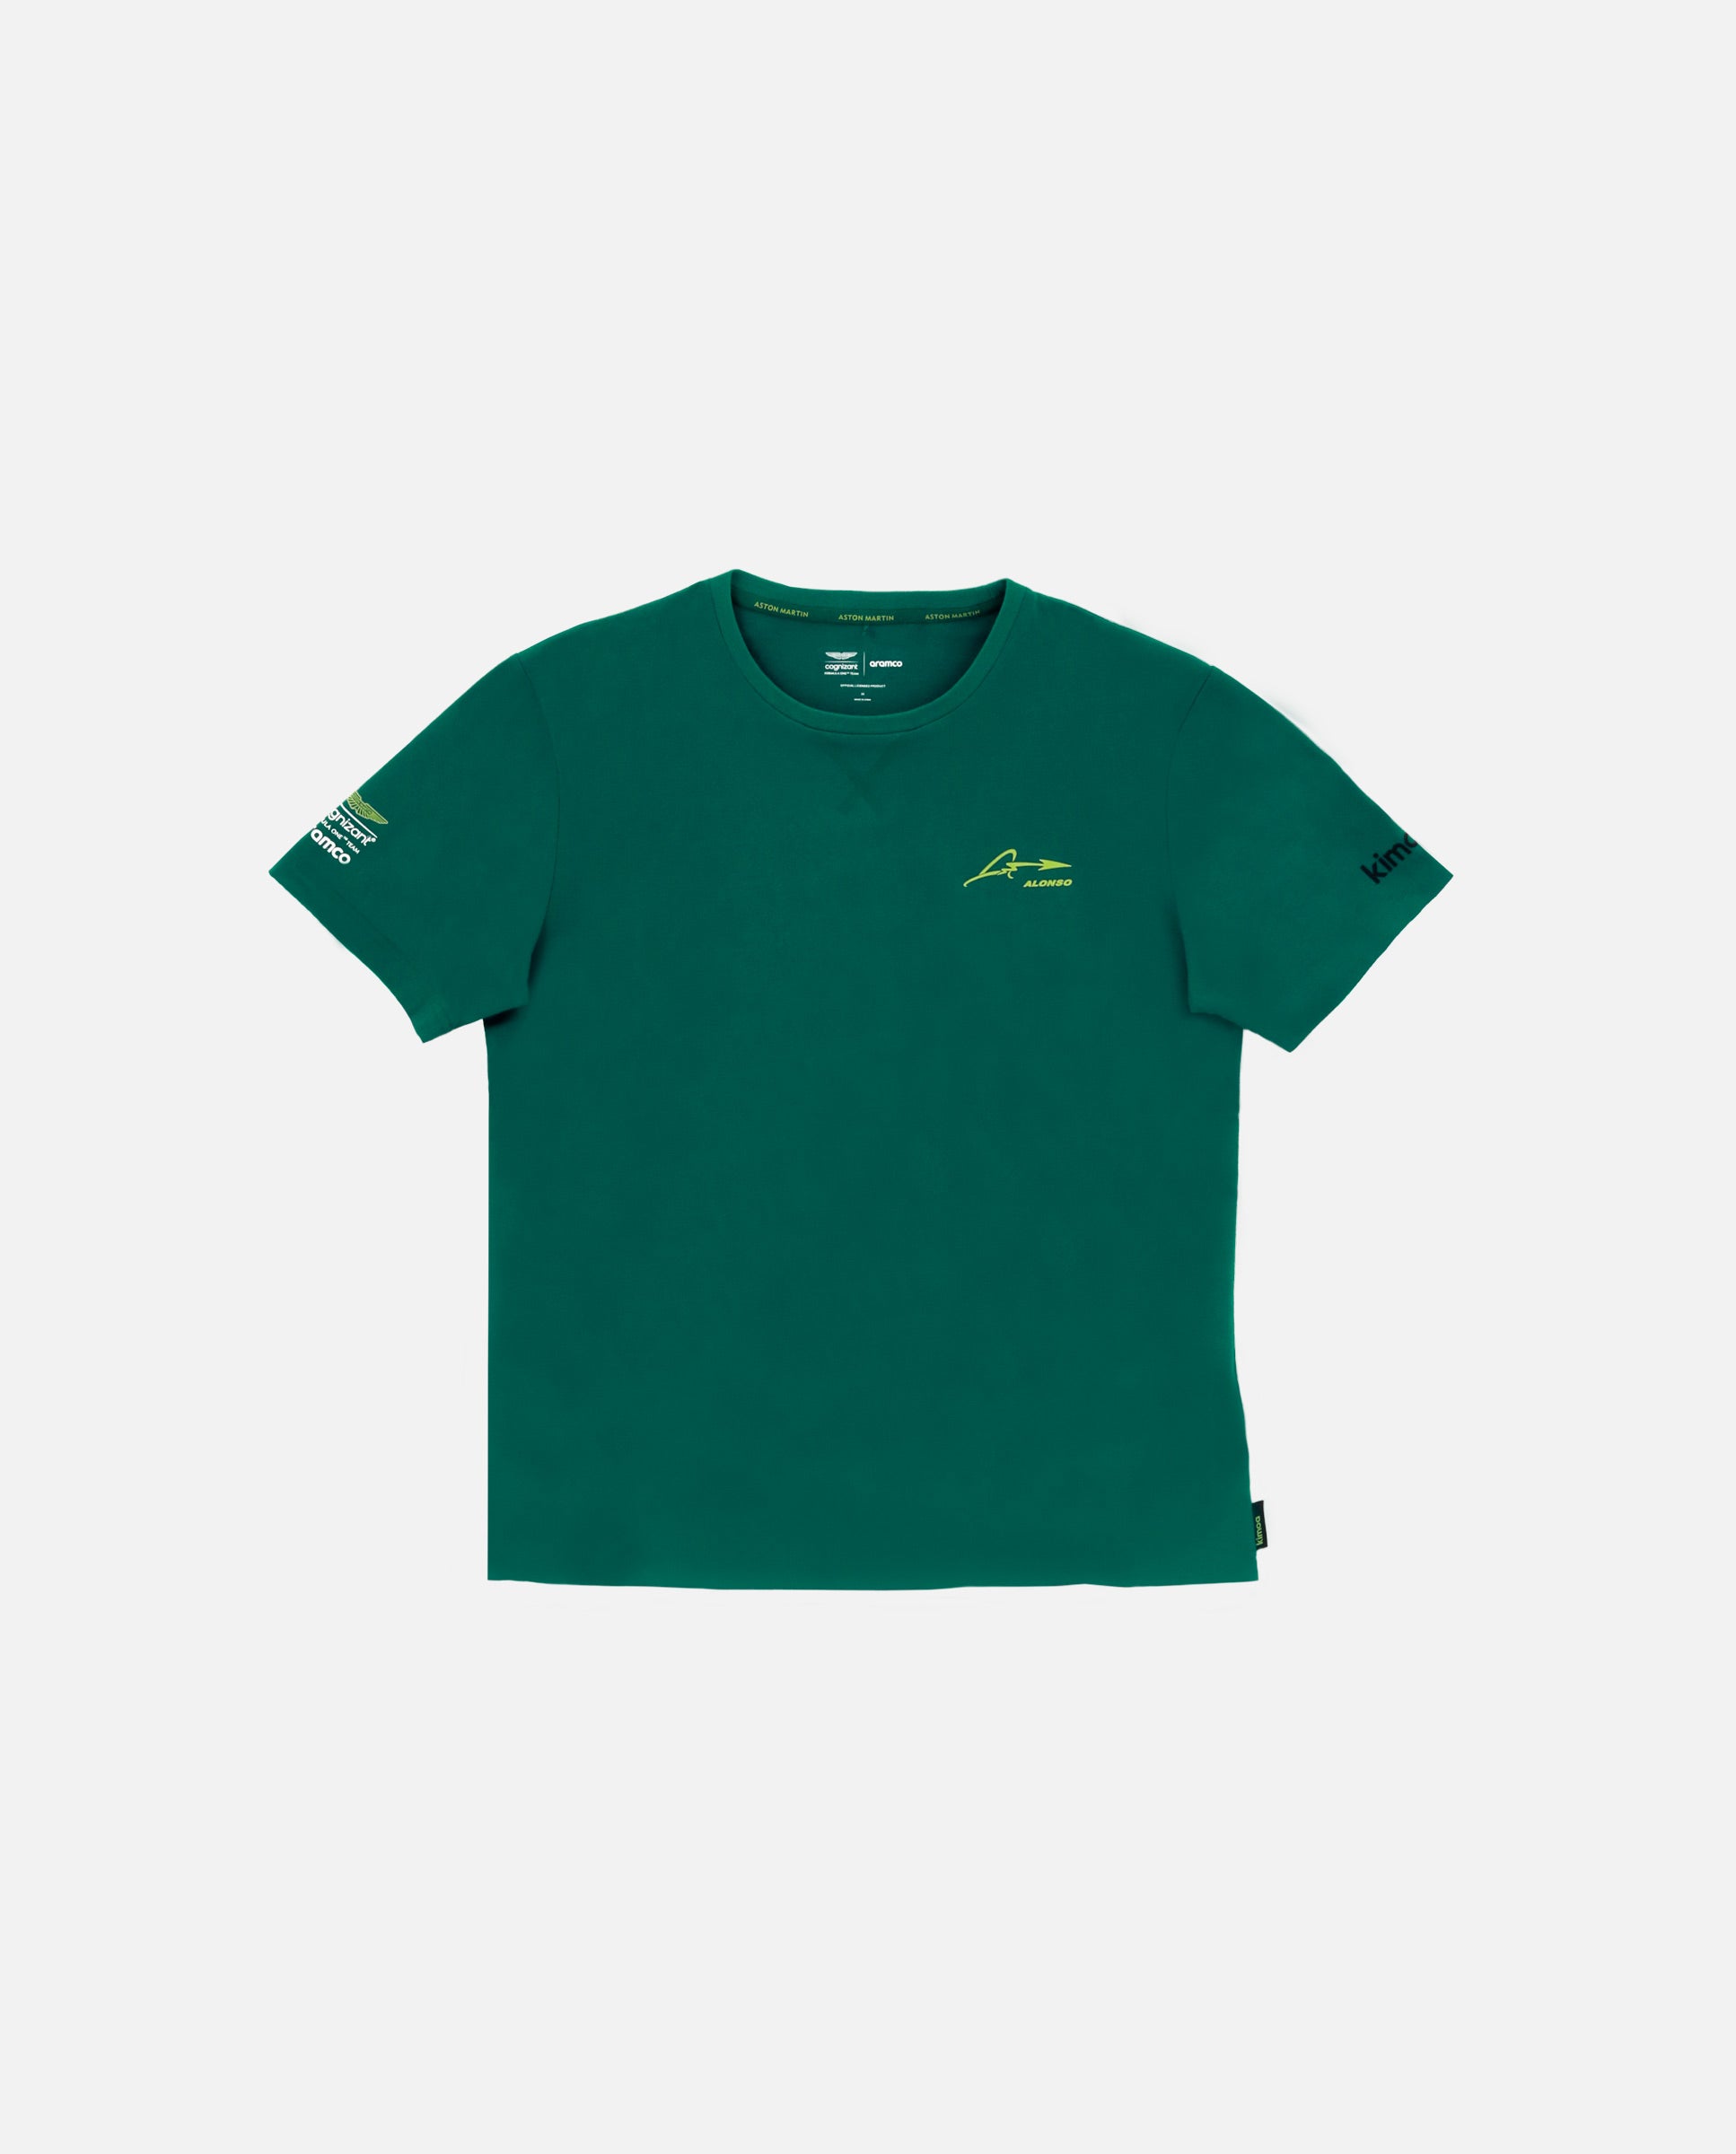 Camiseta AMCF1 Lifestyle FA verde NIÑO